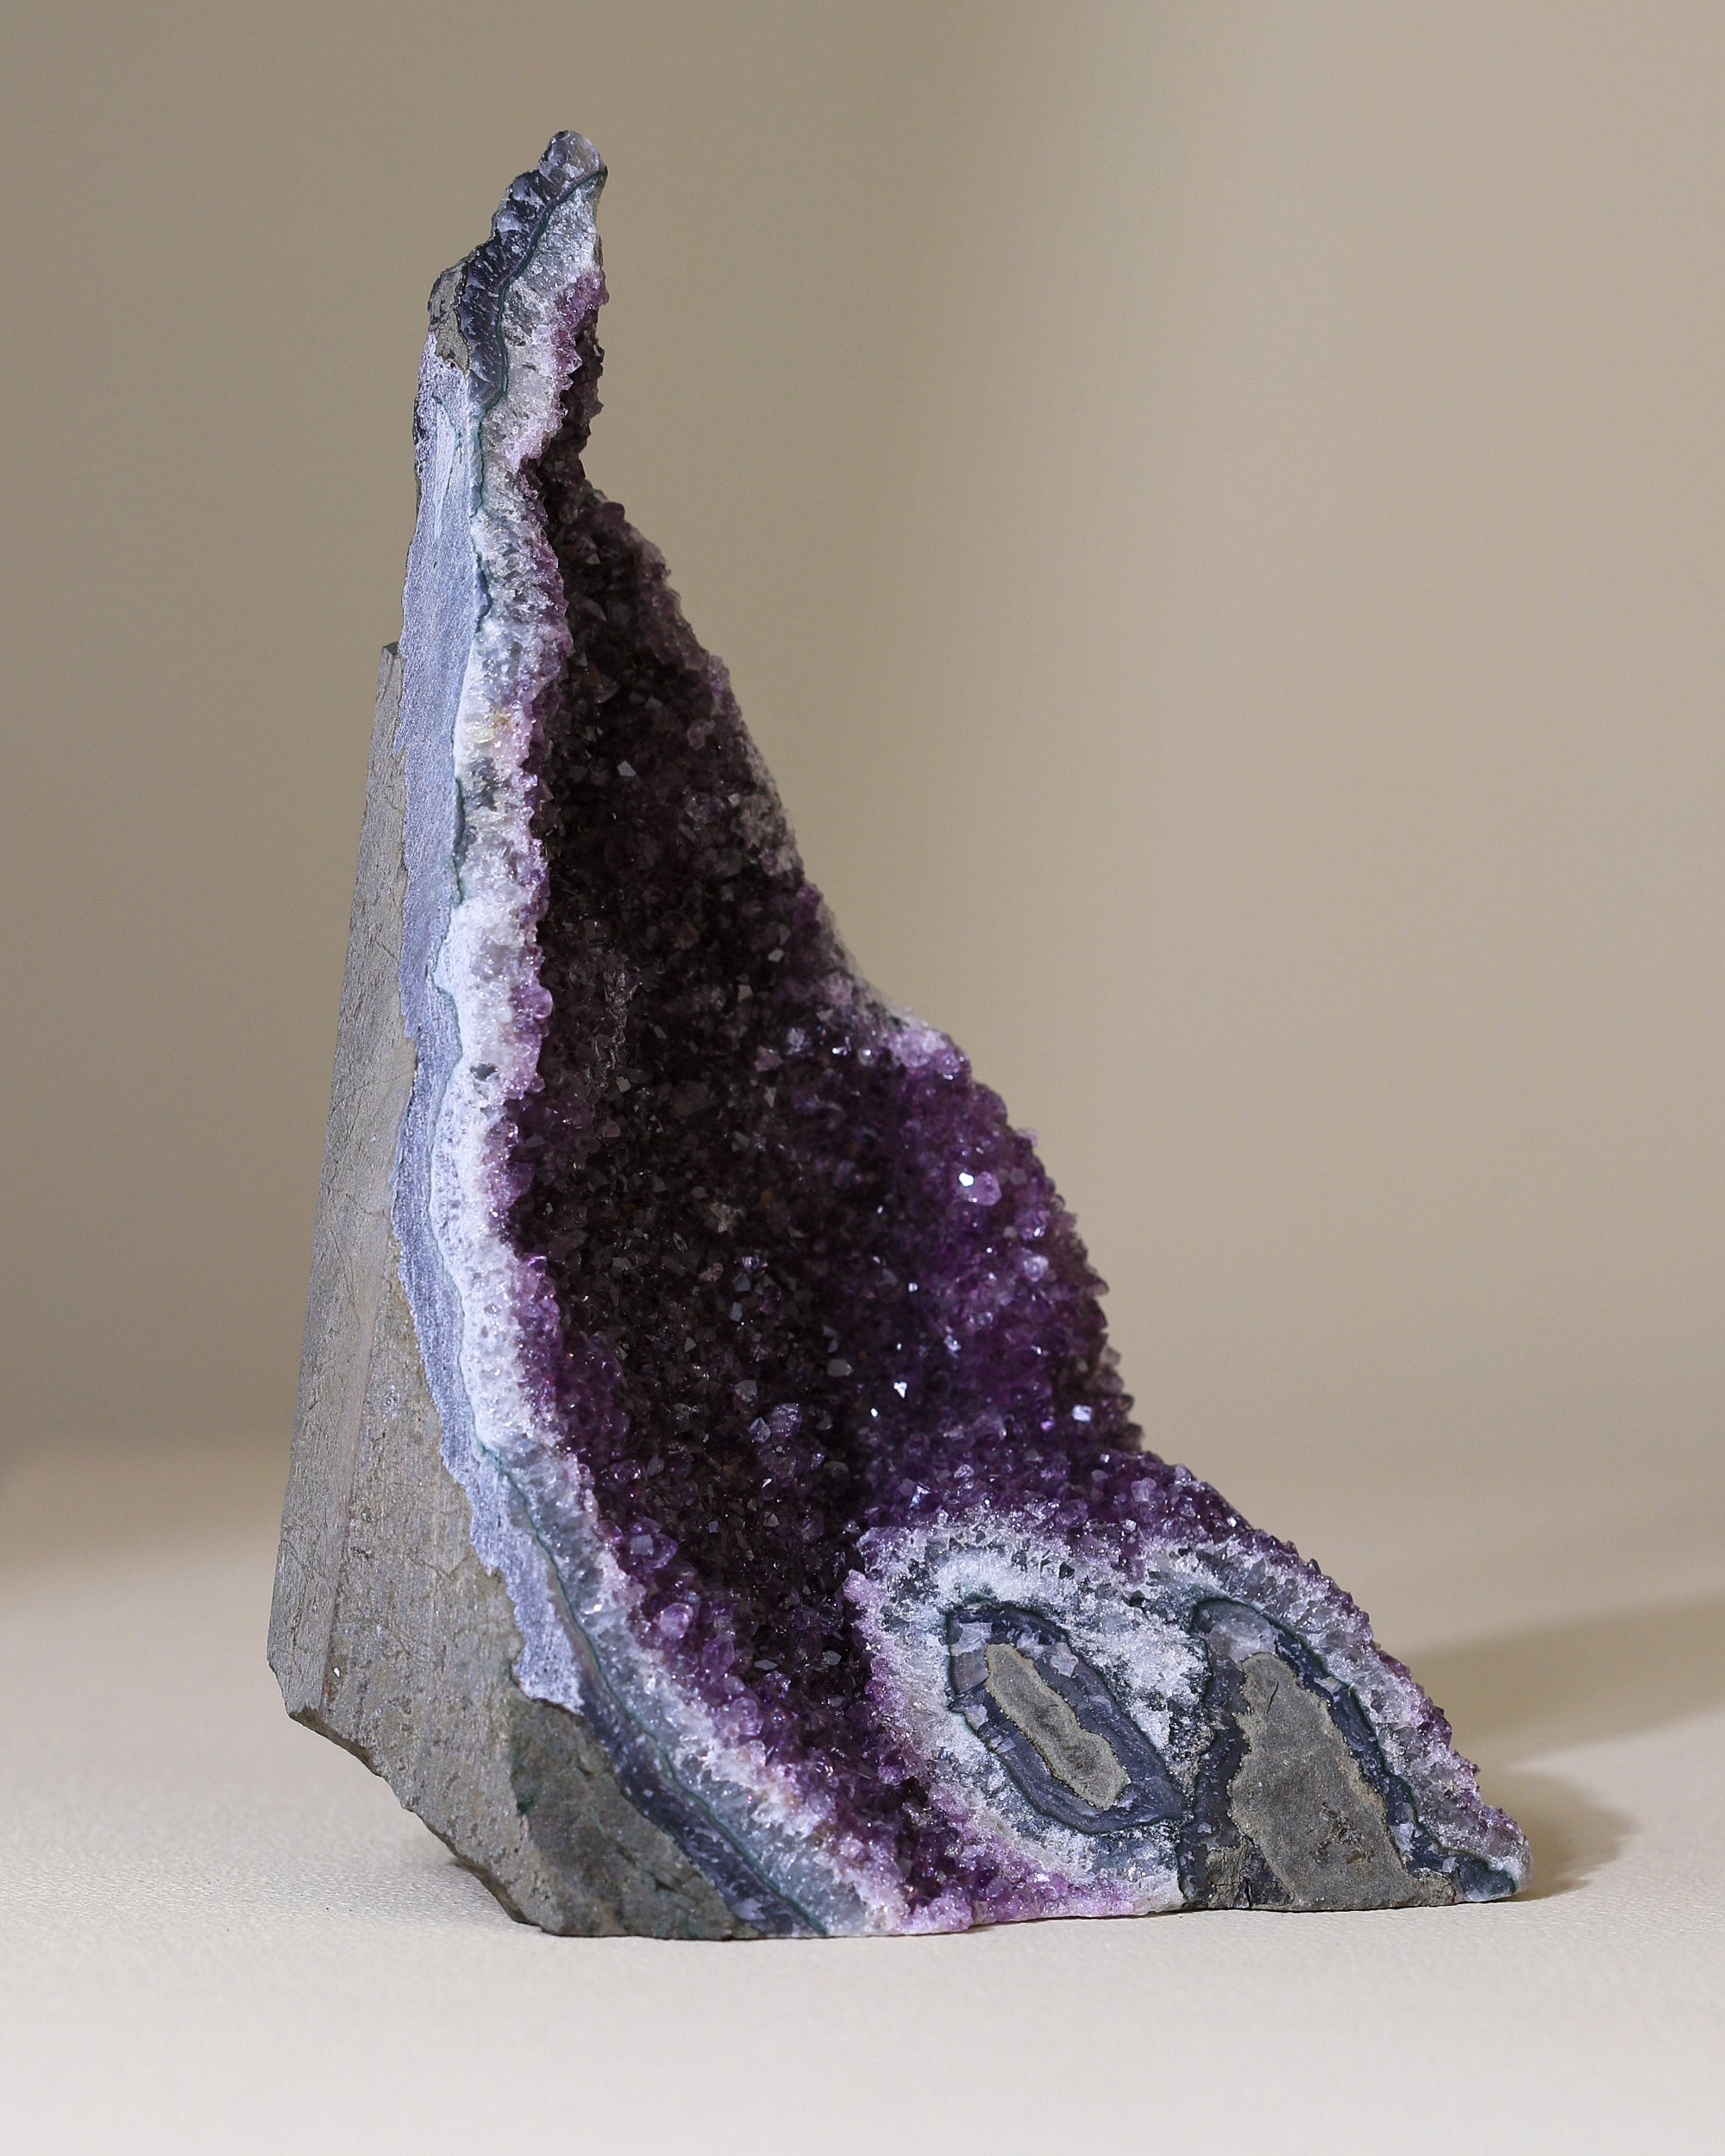 Amethyst Kristall, Einzelstück